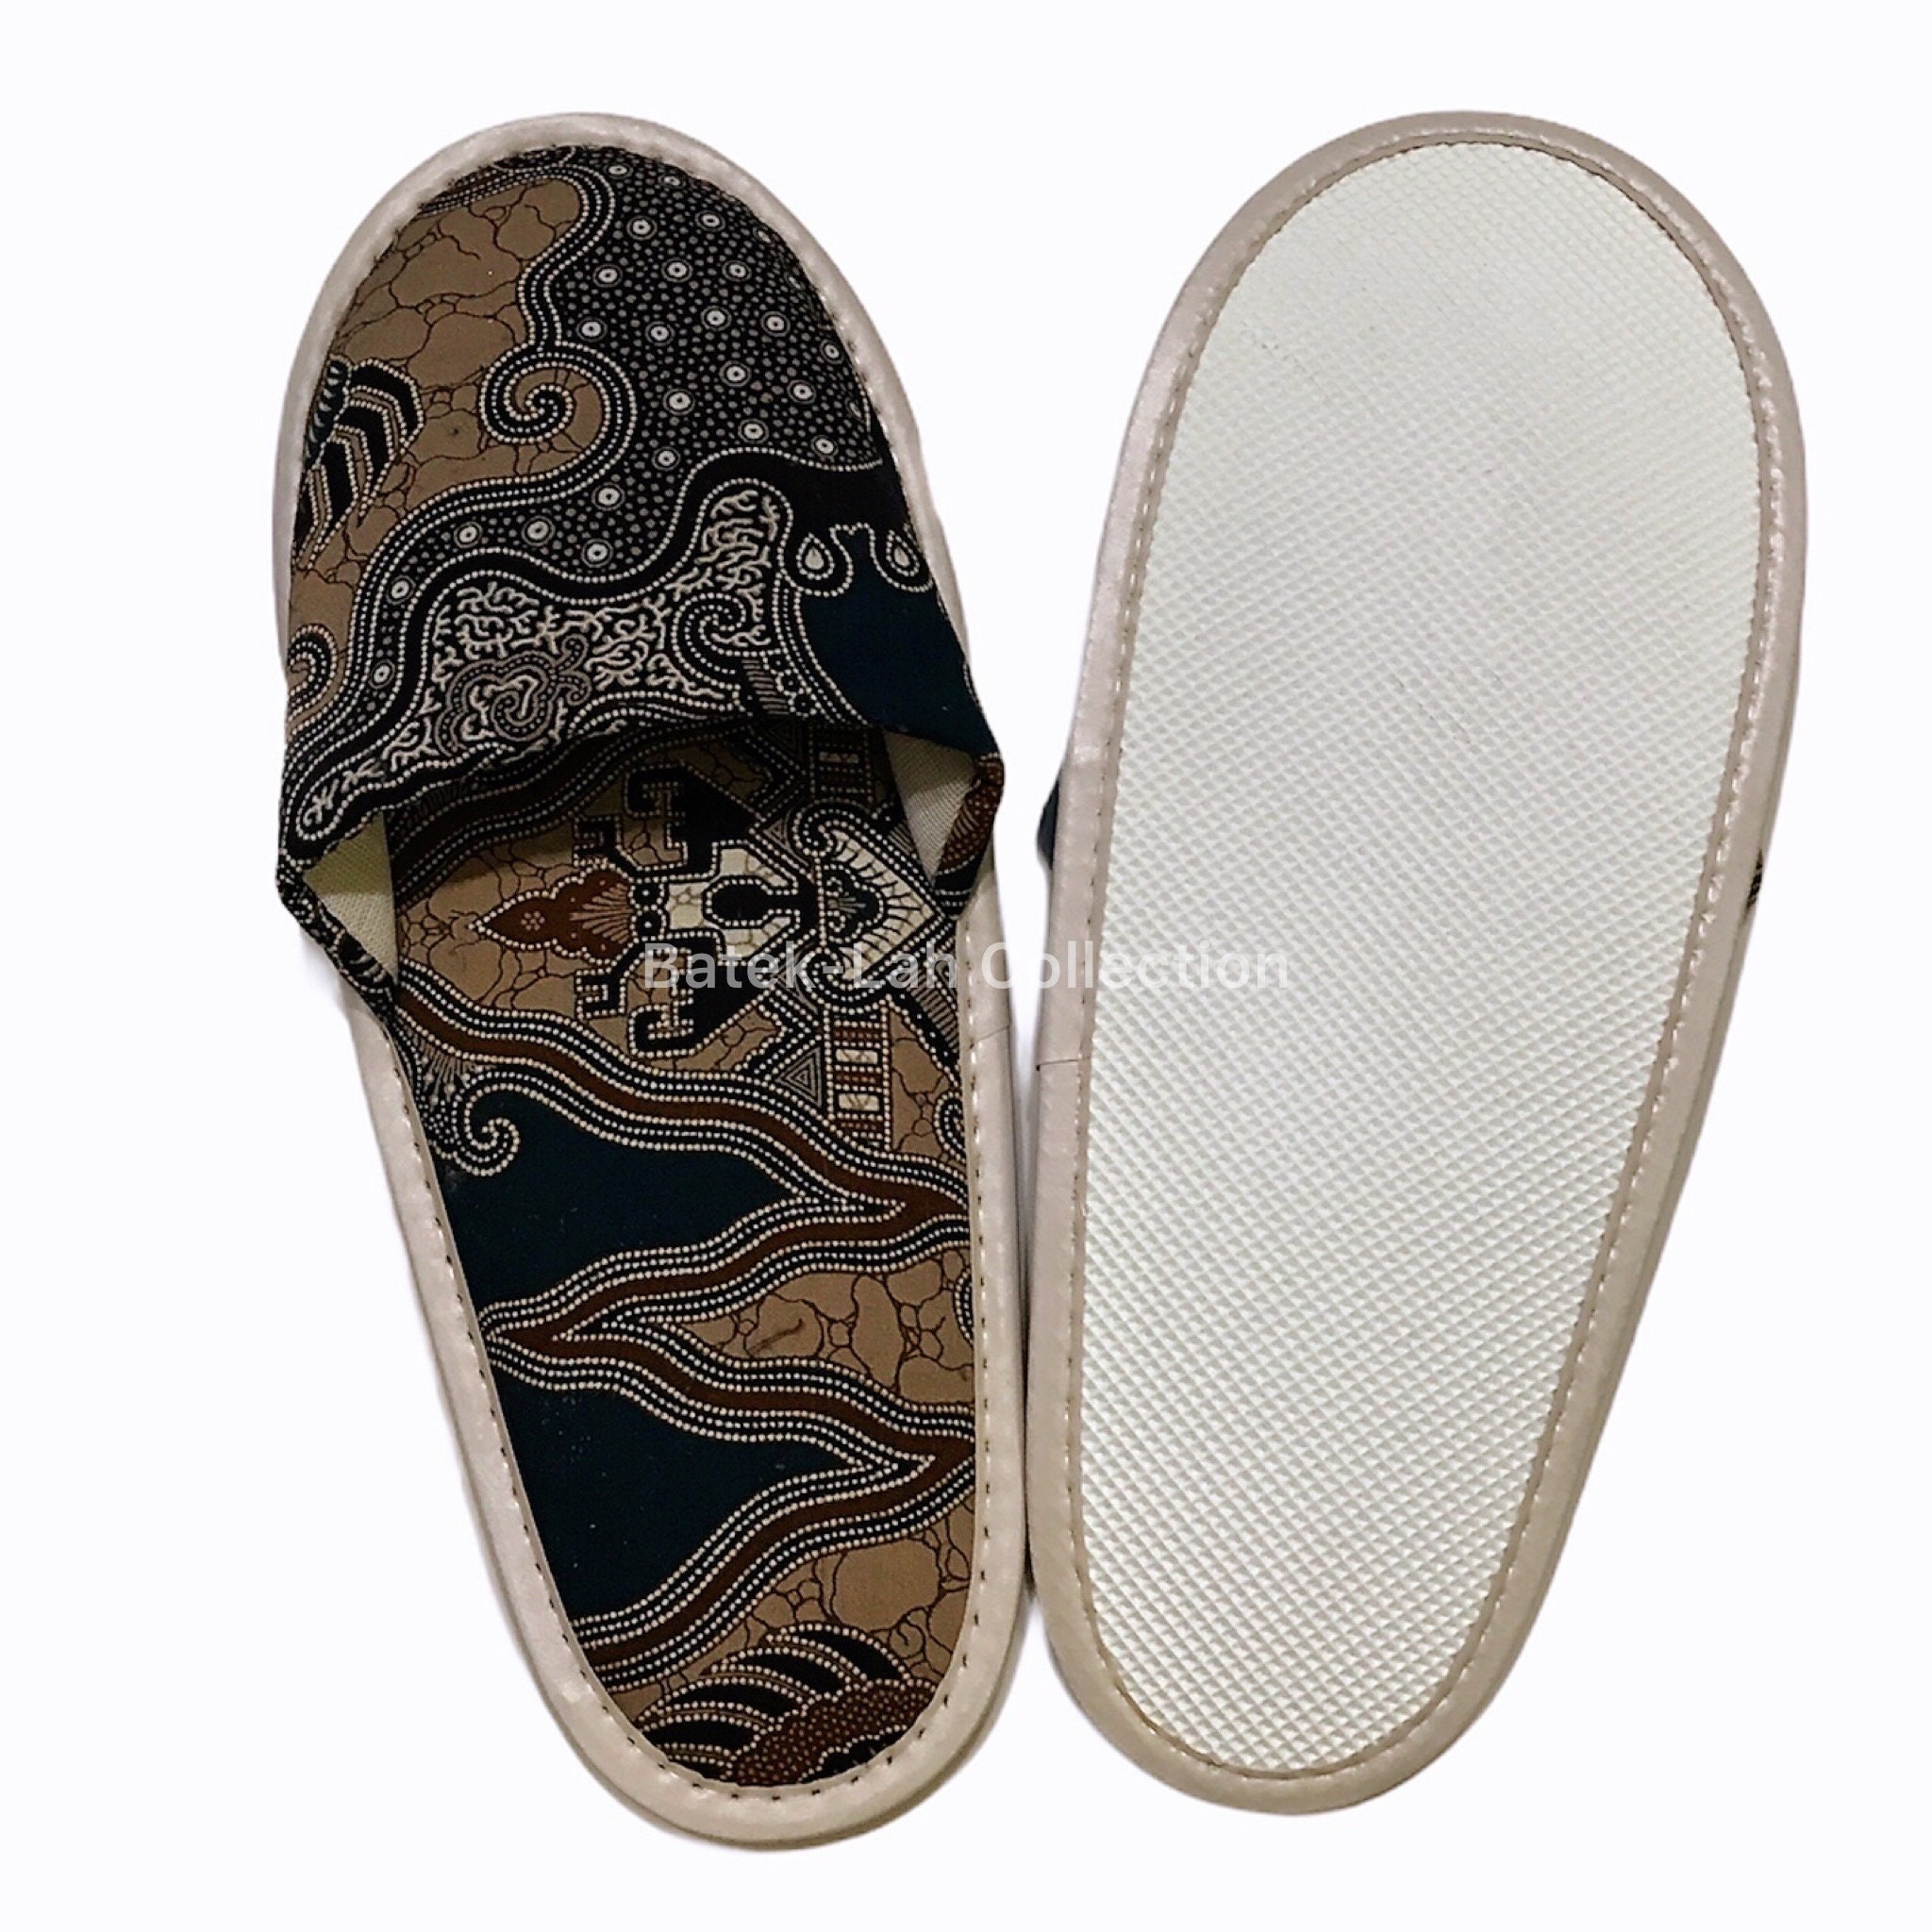 Handcrafted Batik-patterned Canvas Sneakers: Unique Custom 